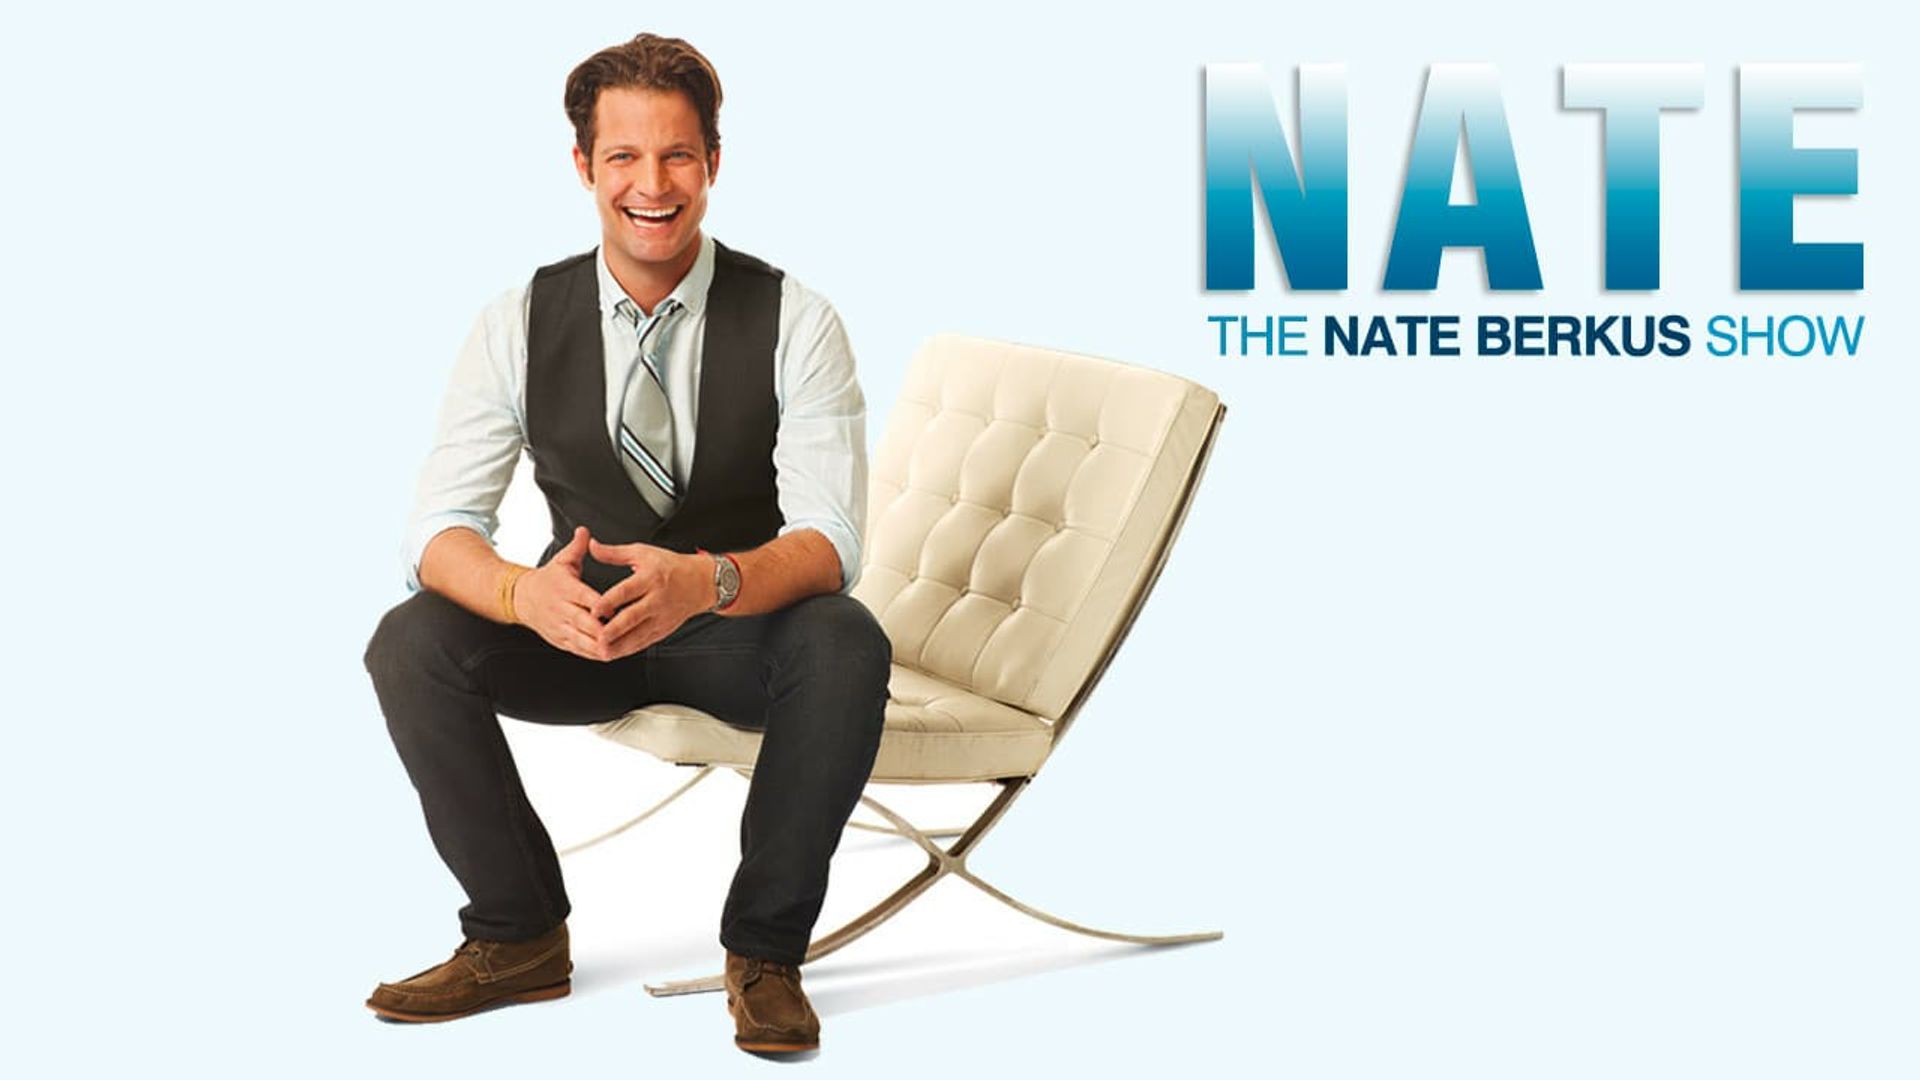 The Nate Berkus Show background